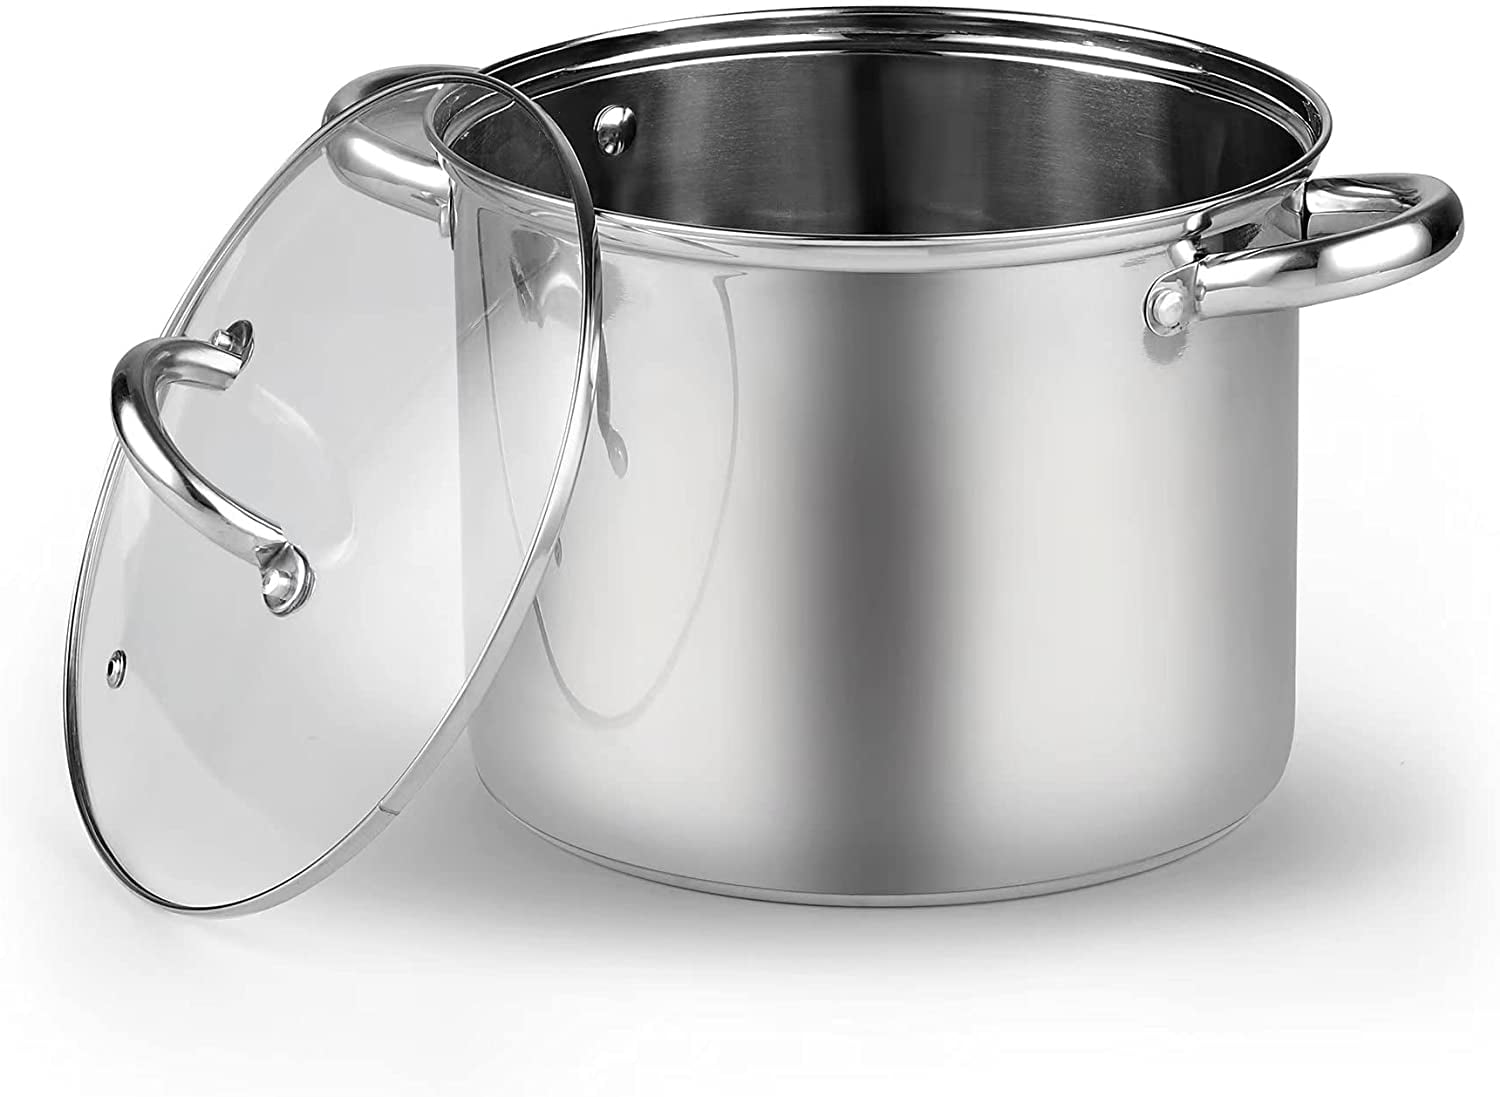 DricRoda Soup Pot 8 Quart Pot Stainless Steel Pasta Pot, Nonstick Stock Pot  Cooking Pot with Lid and Handles, Large Pot Big Pot for Cooking Glass Lid